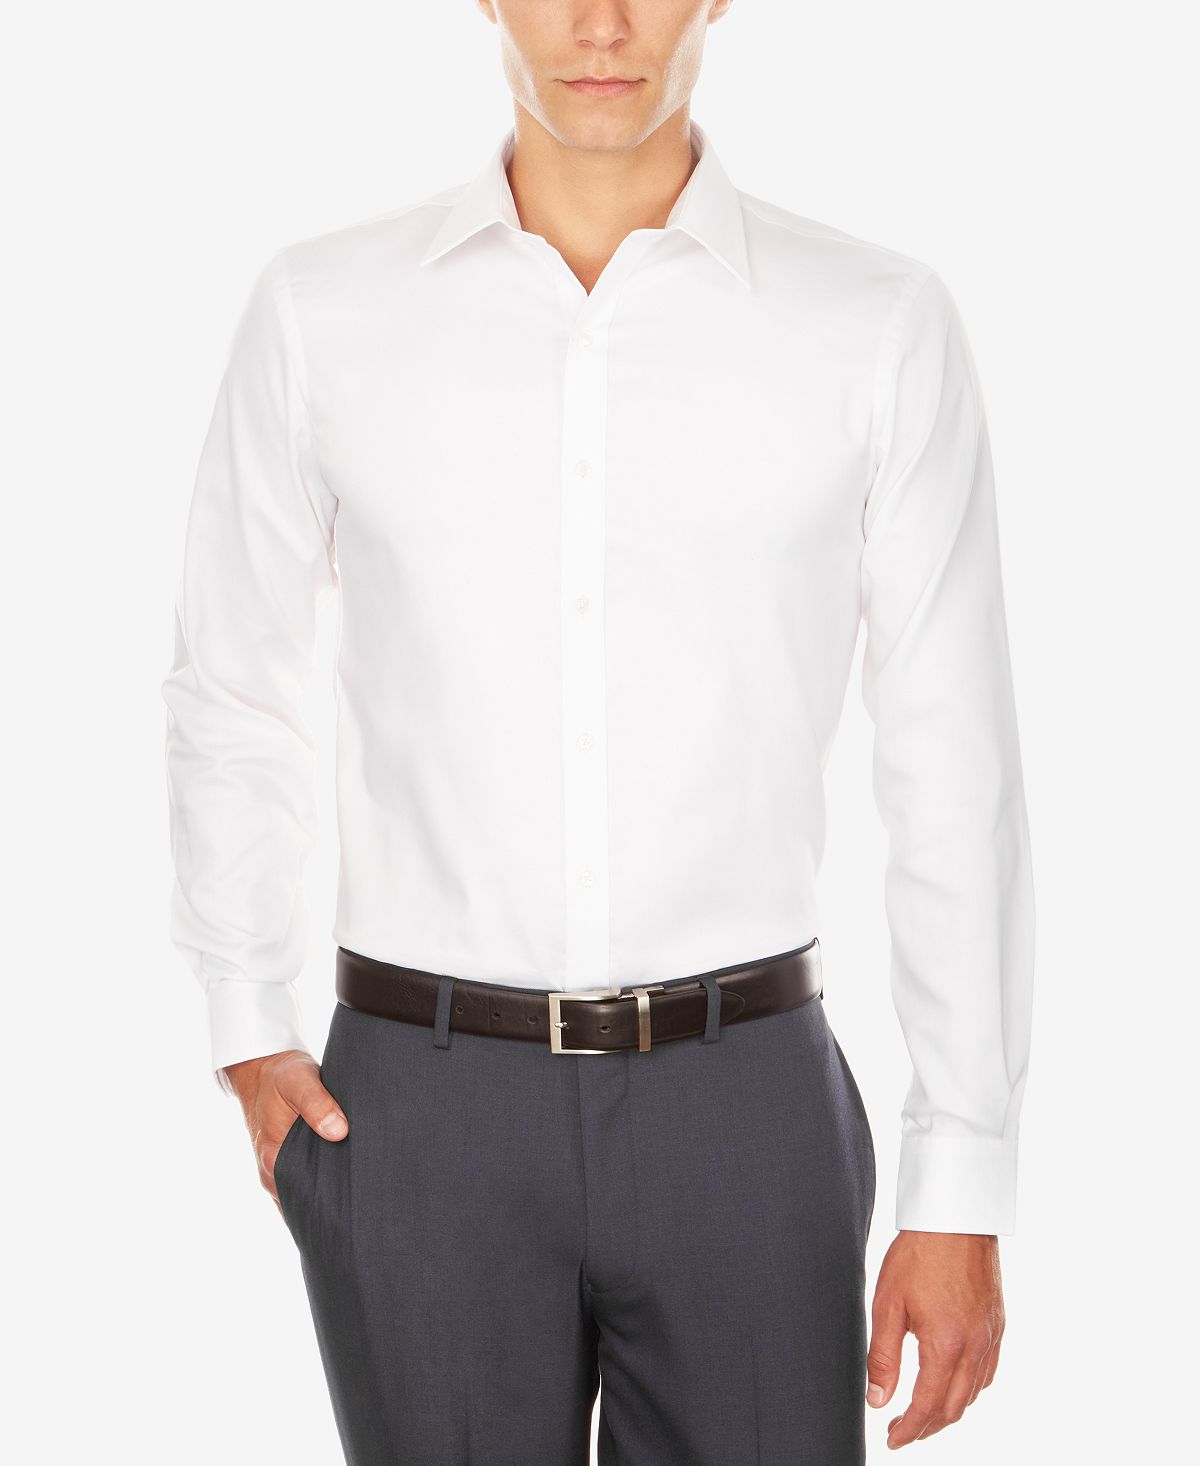 Tommy Hilfiger Athletic Fit Performance Stretch Th Flex Collar Dress Shirt White